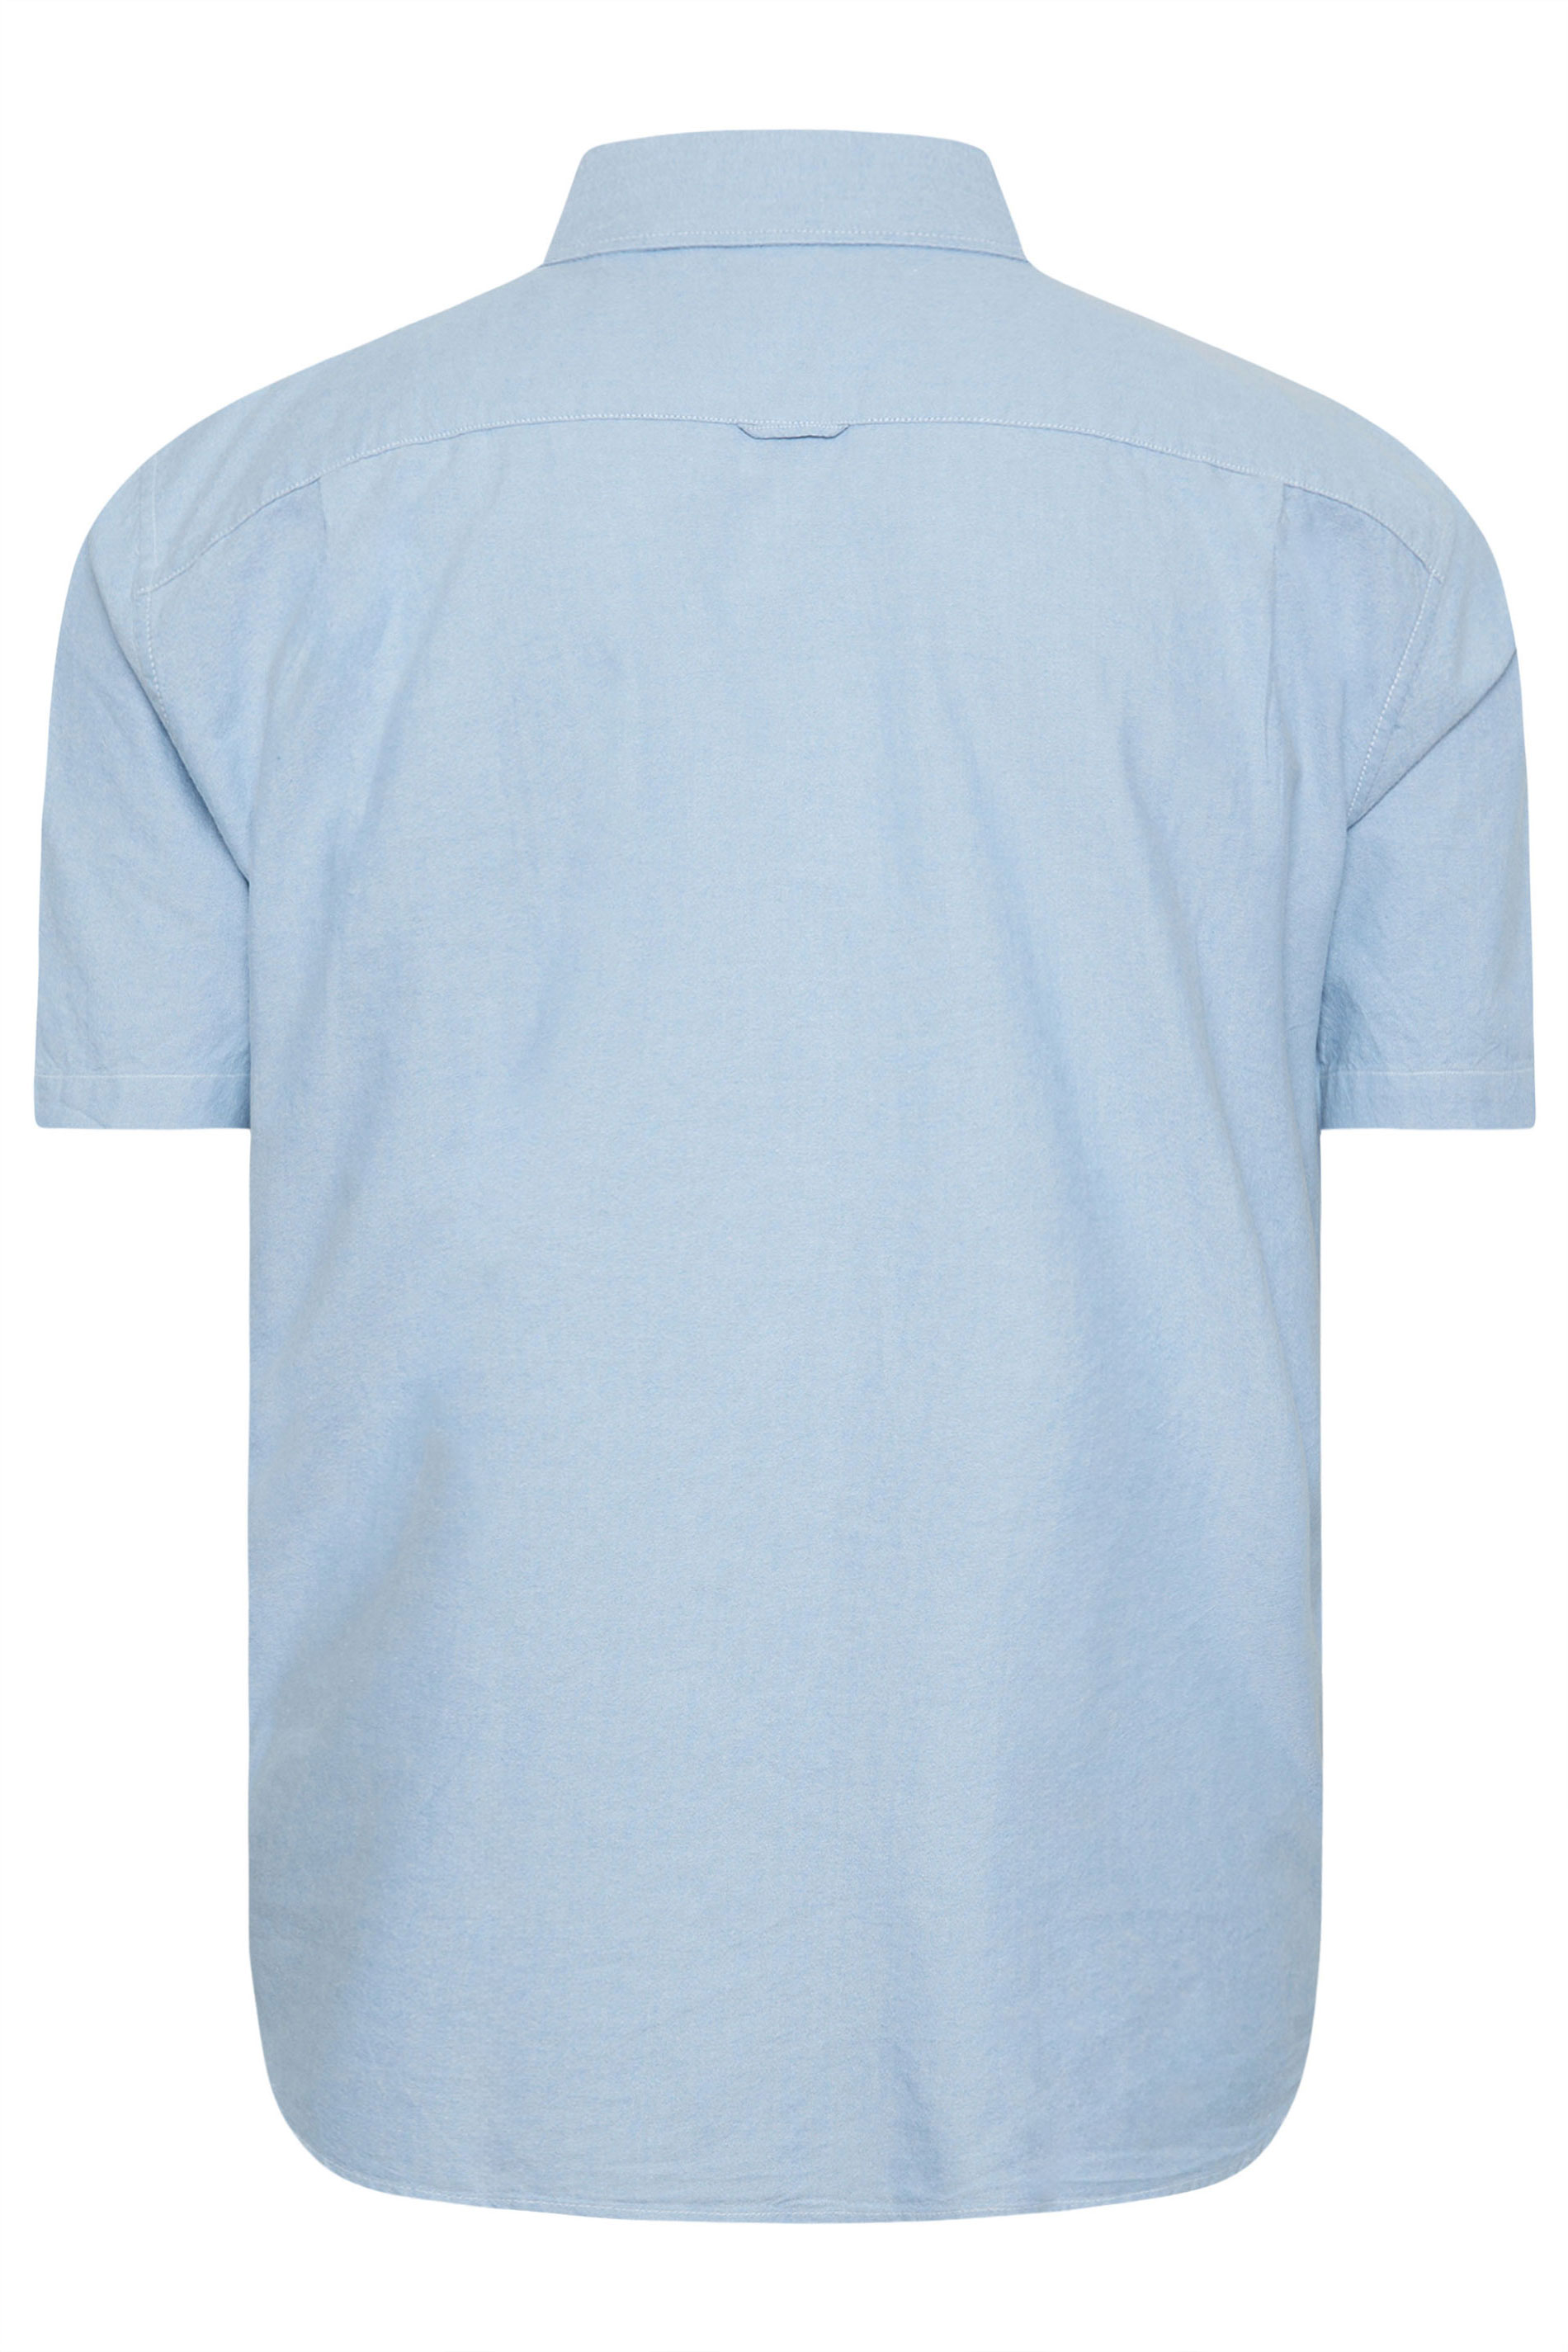 U.S. POLO ASSN. Blue Short Sleeve Oxford Shirt | BadRhino 3